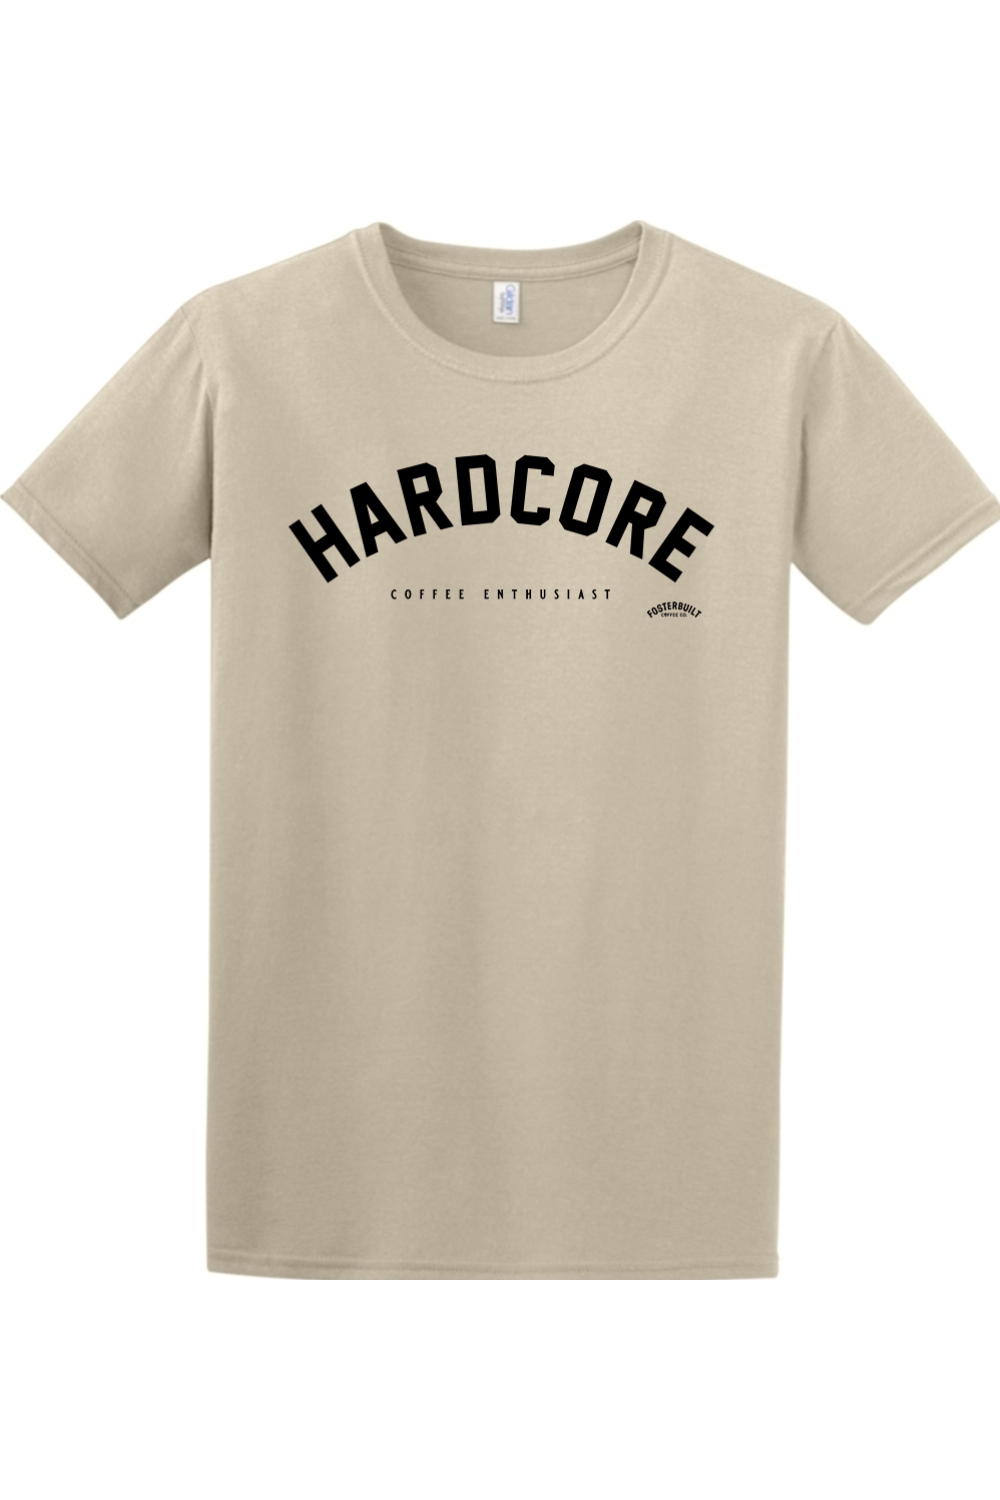 HARDCORE COFFEE ENTHUSIAST - Mens T-Shirt